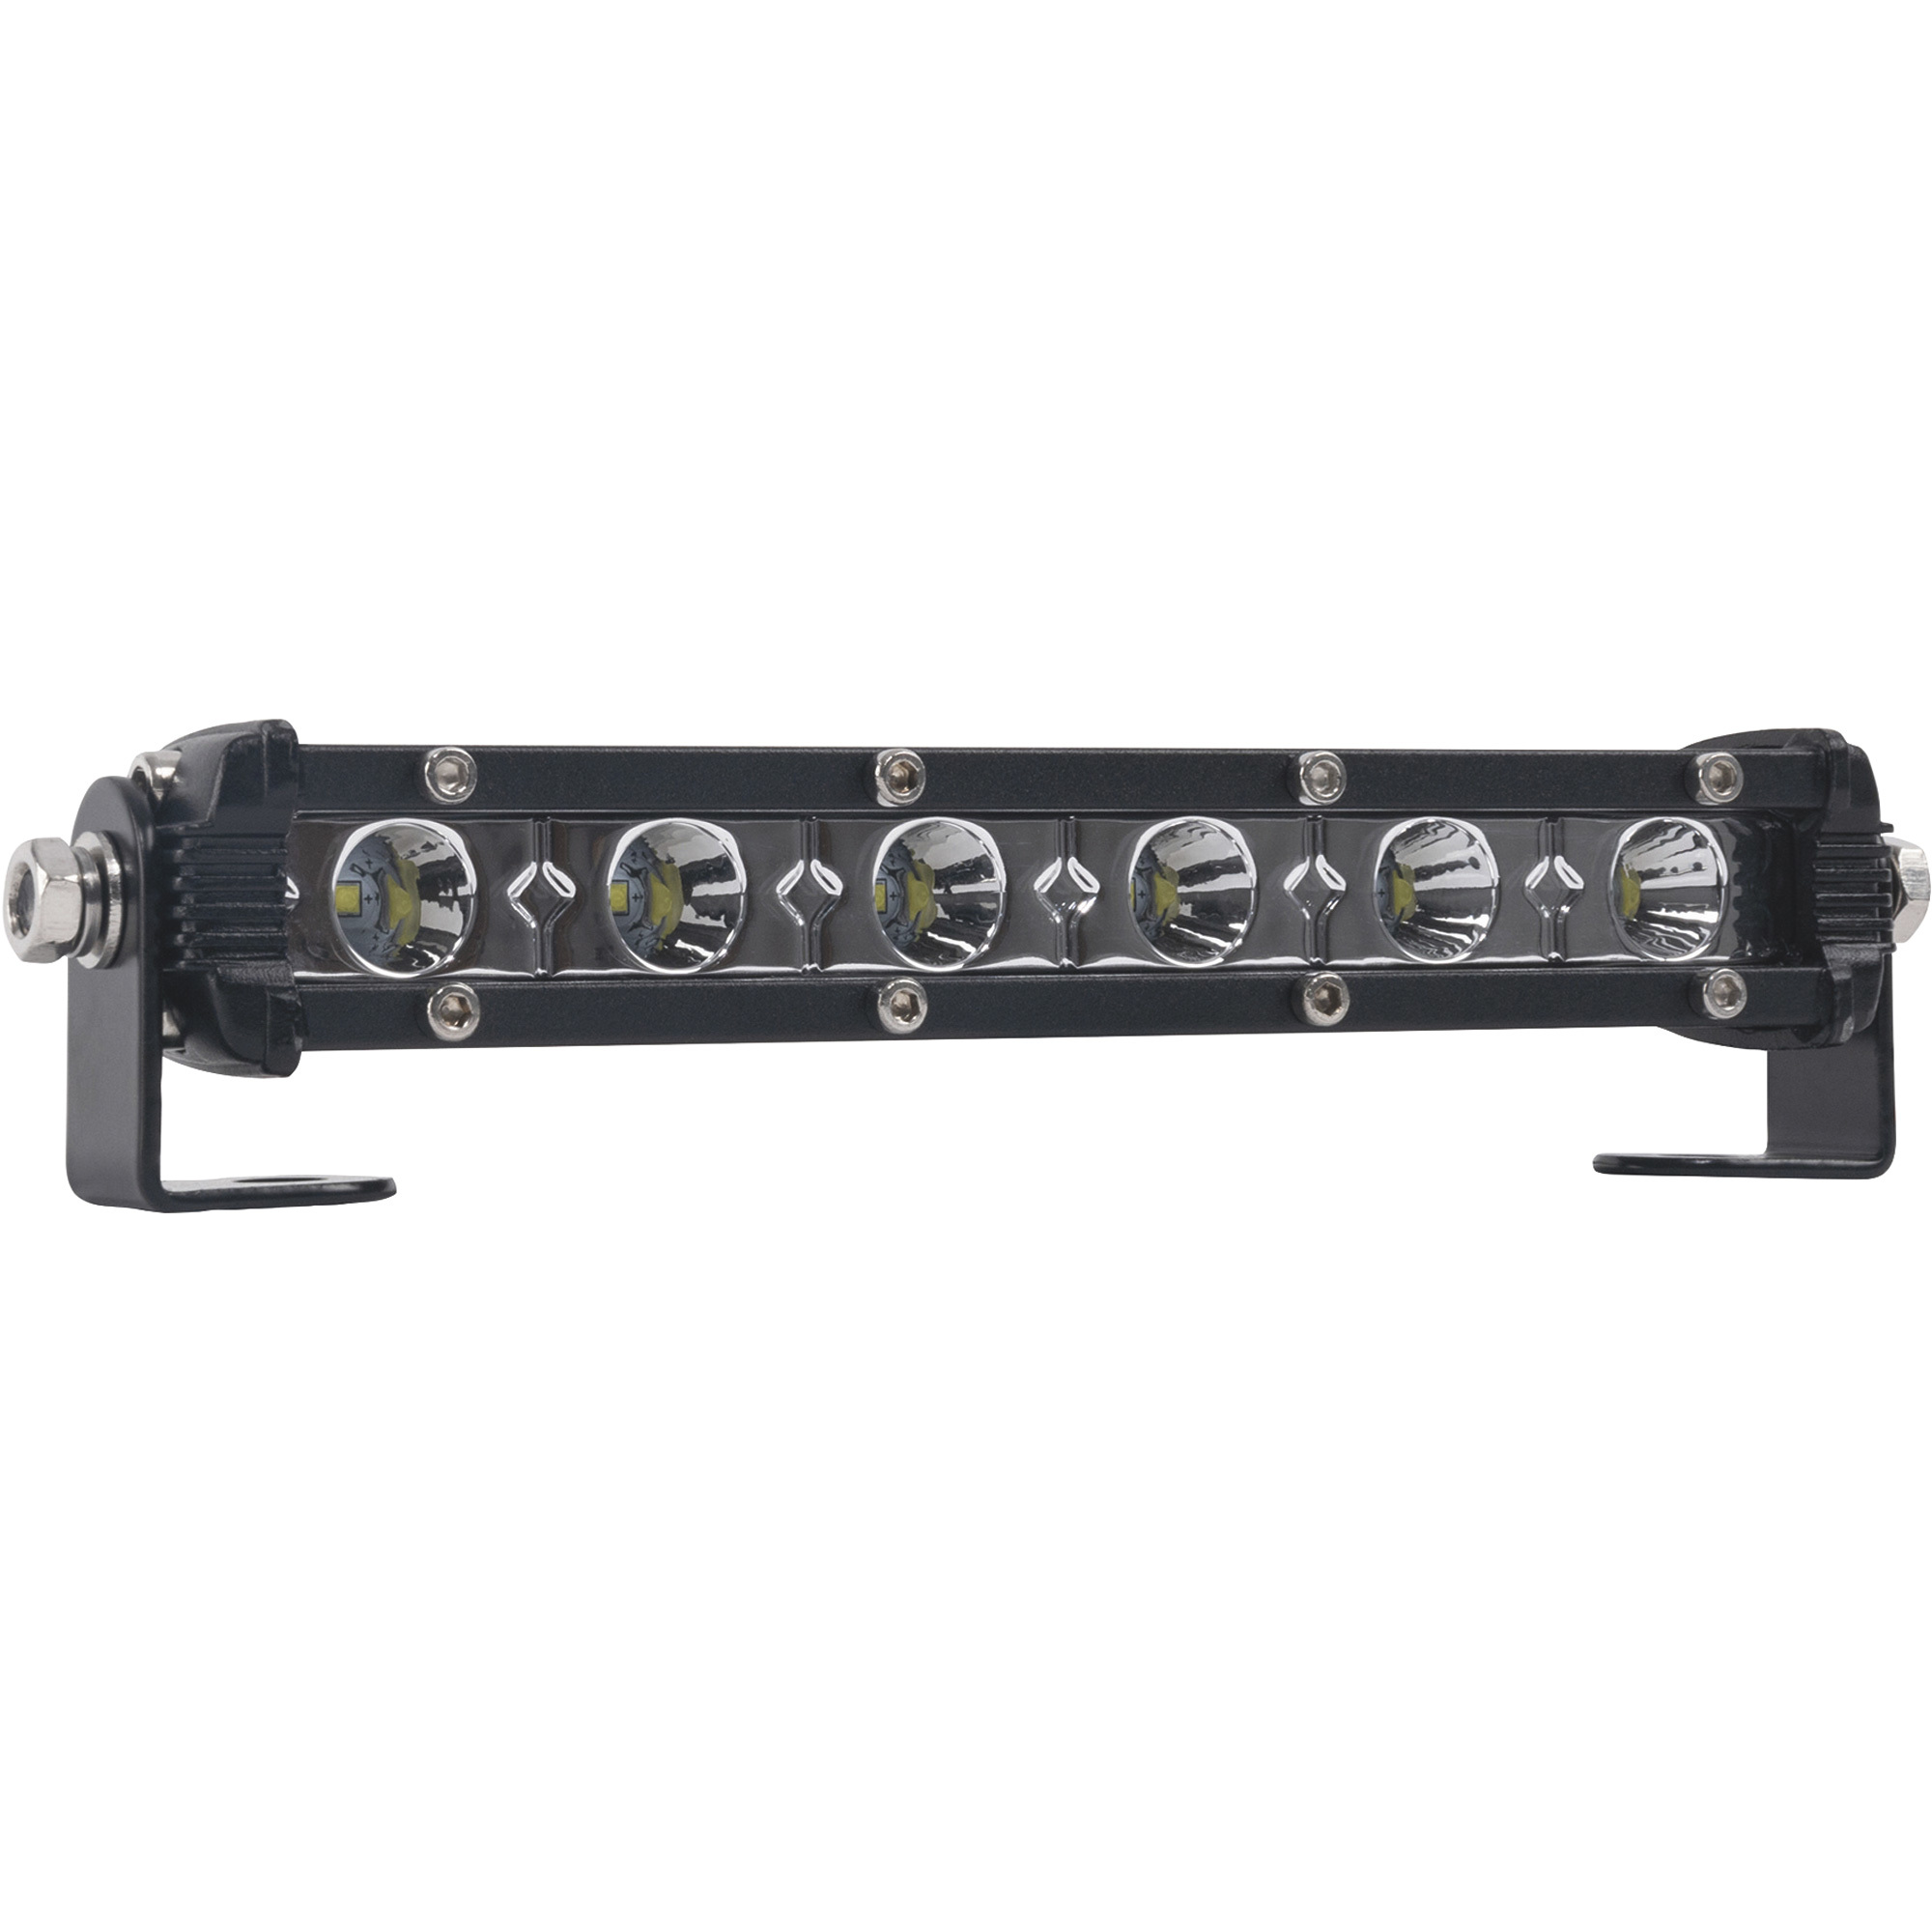 Blazer 12/24 Volt LED Slimline Spot Light Bar â 6Inch, 1260 Lumens, 6 LEDs, Model CWL0006